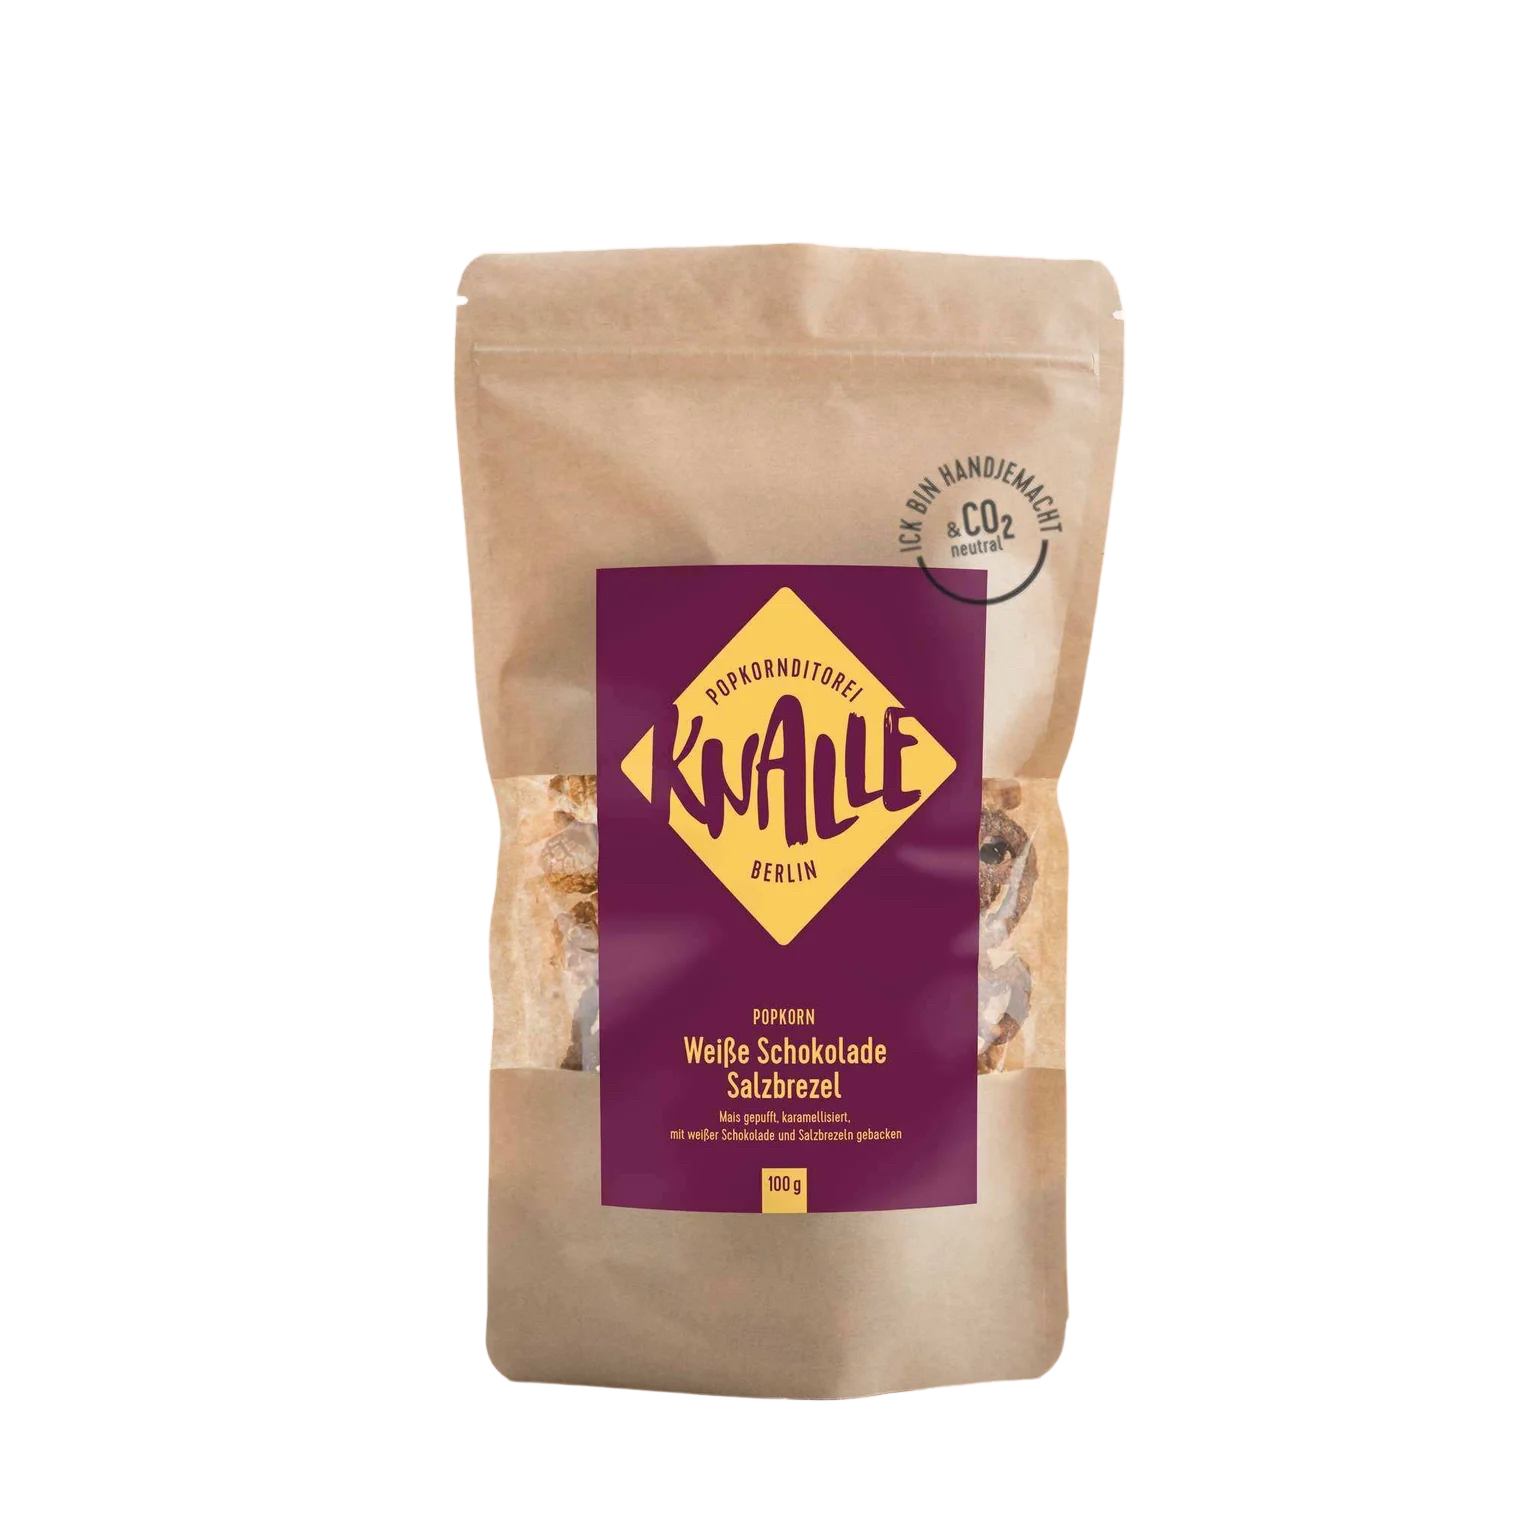 Popcorn | Weiße Schokolade Salzbrezel | 100 g | Knalle